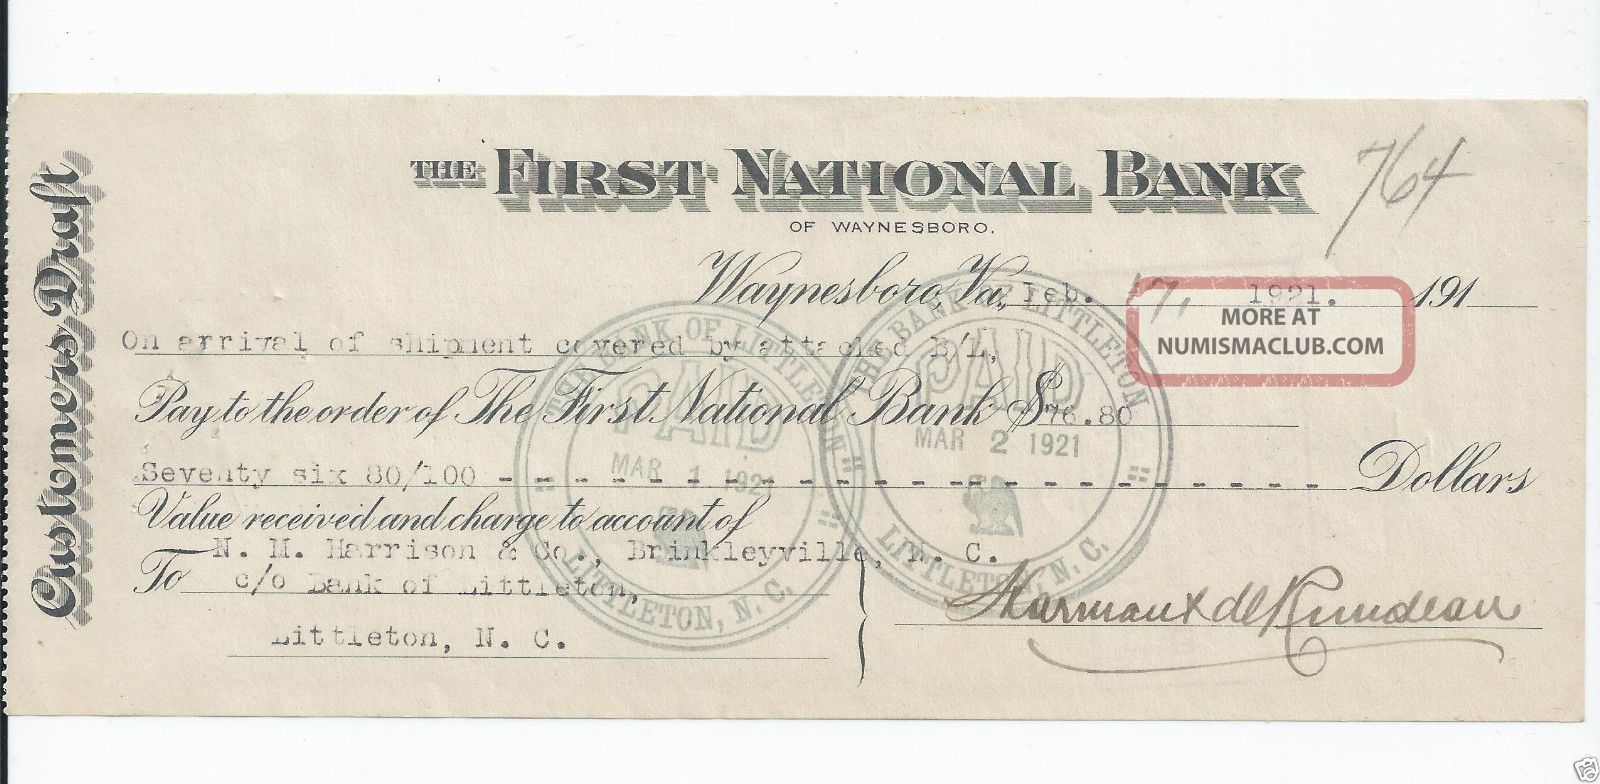 The First National Bank Of Waynesboro, Va February 17, 1921 $76. 80 Check